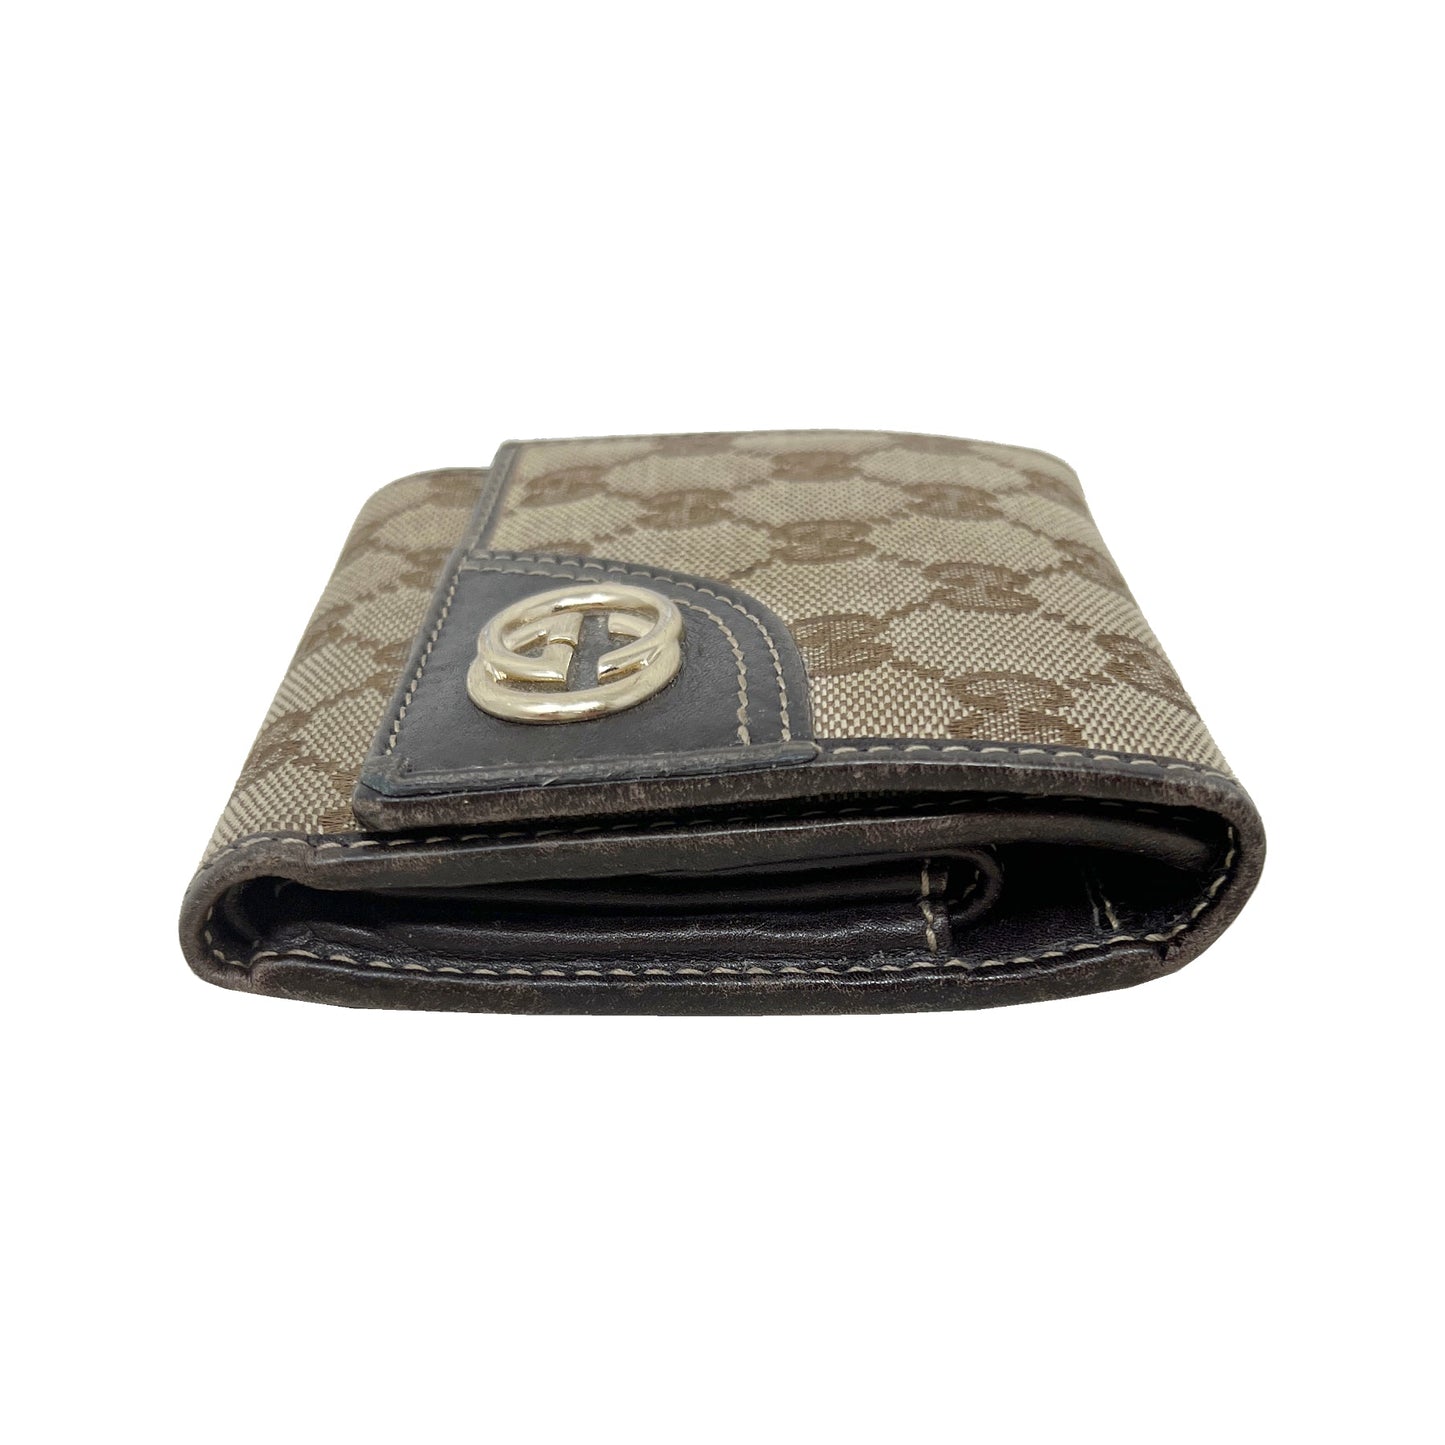 Gucci Interlocking GG Logo Monogrammed French Fold Wallet